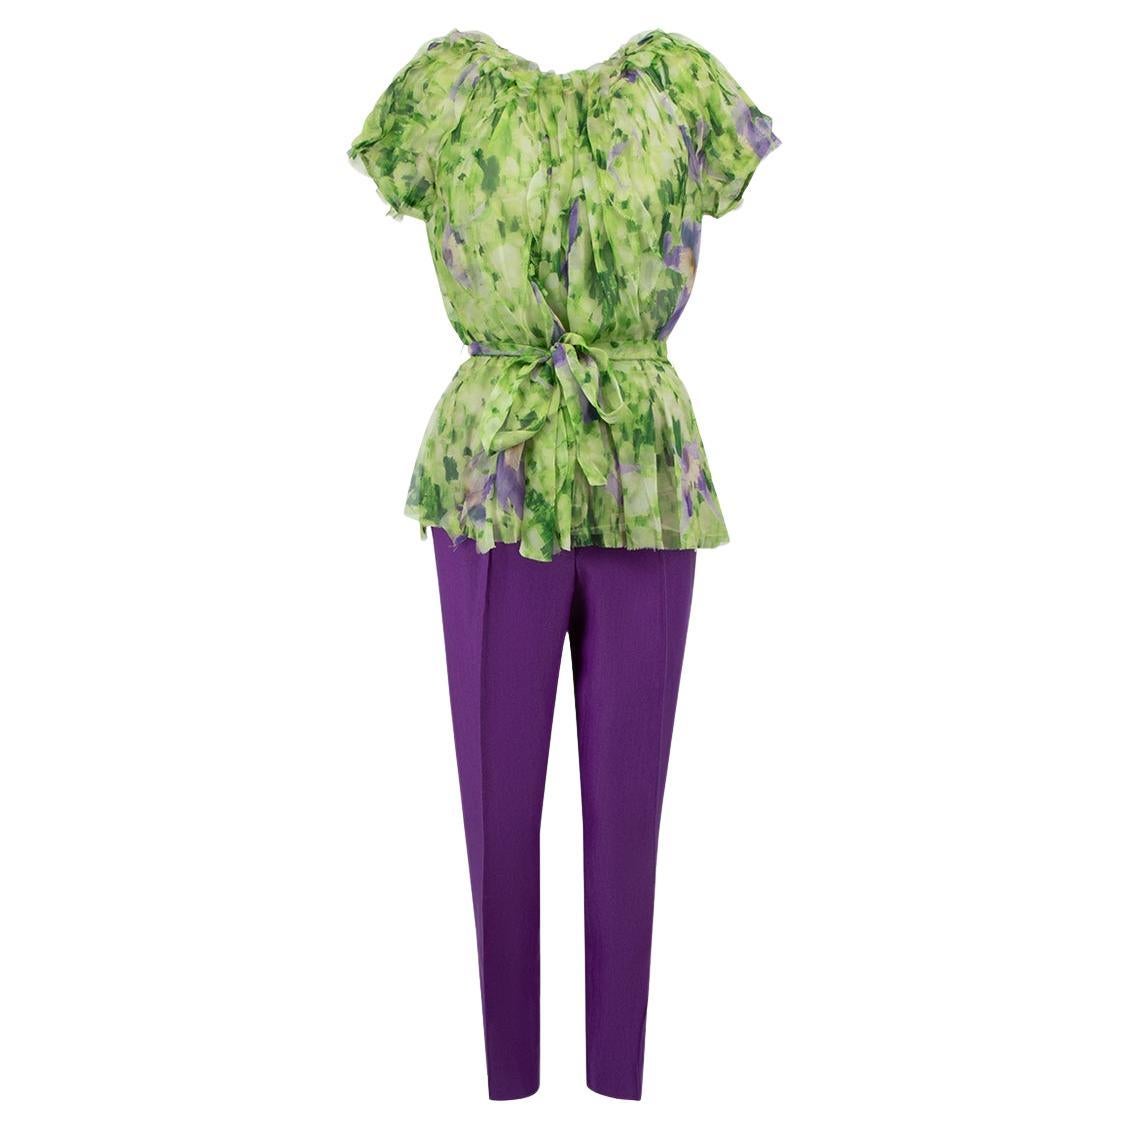 Oscar de la Renta Green & Purple Silk Abstract Print Top & Trousers Set Size L